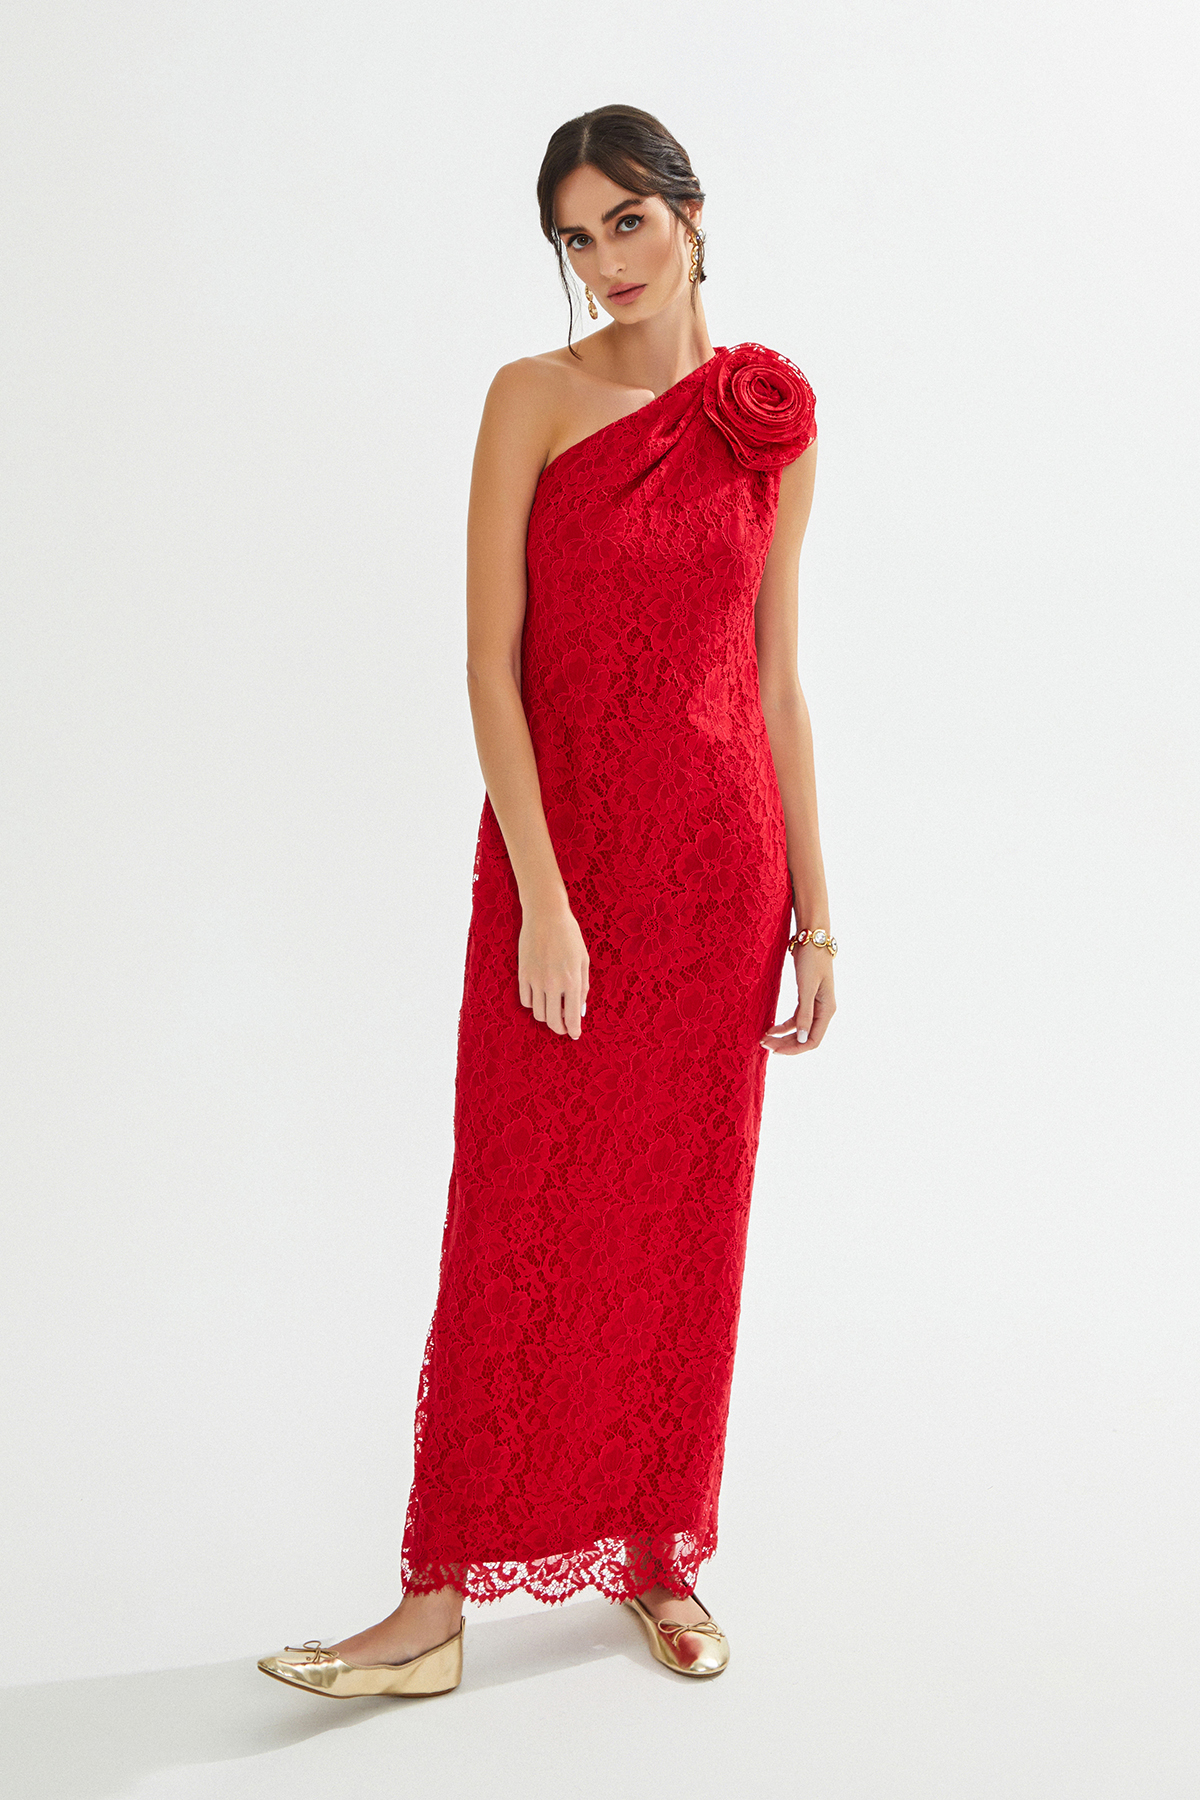  GENNIE One Shoulder Red Lace Maxi Dress